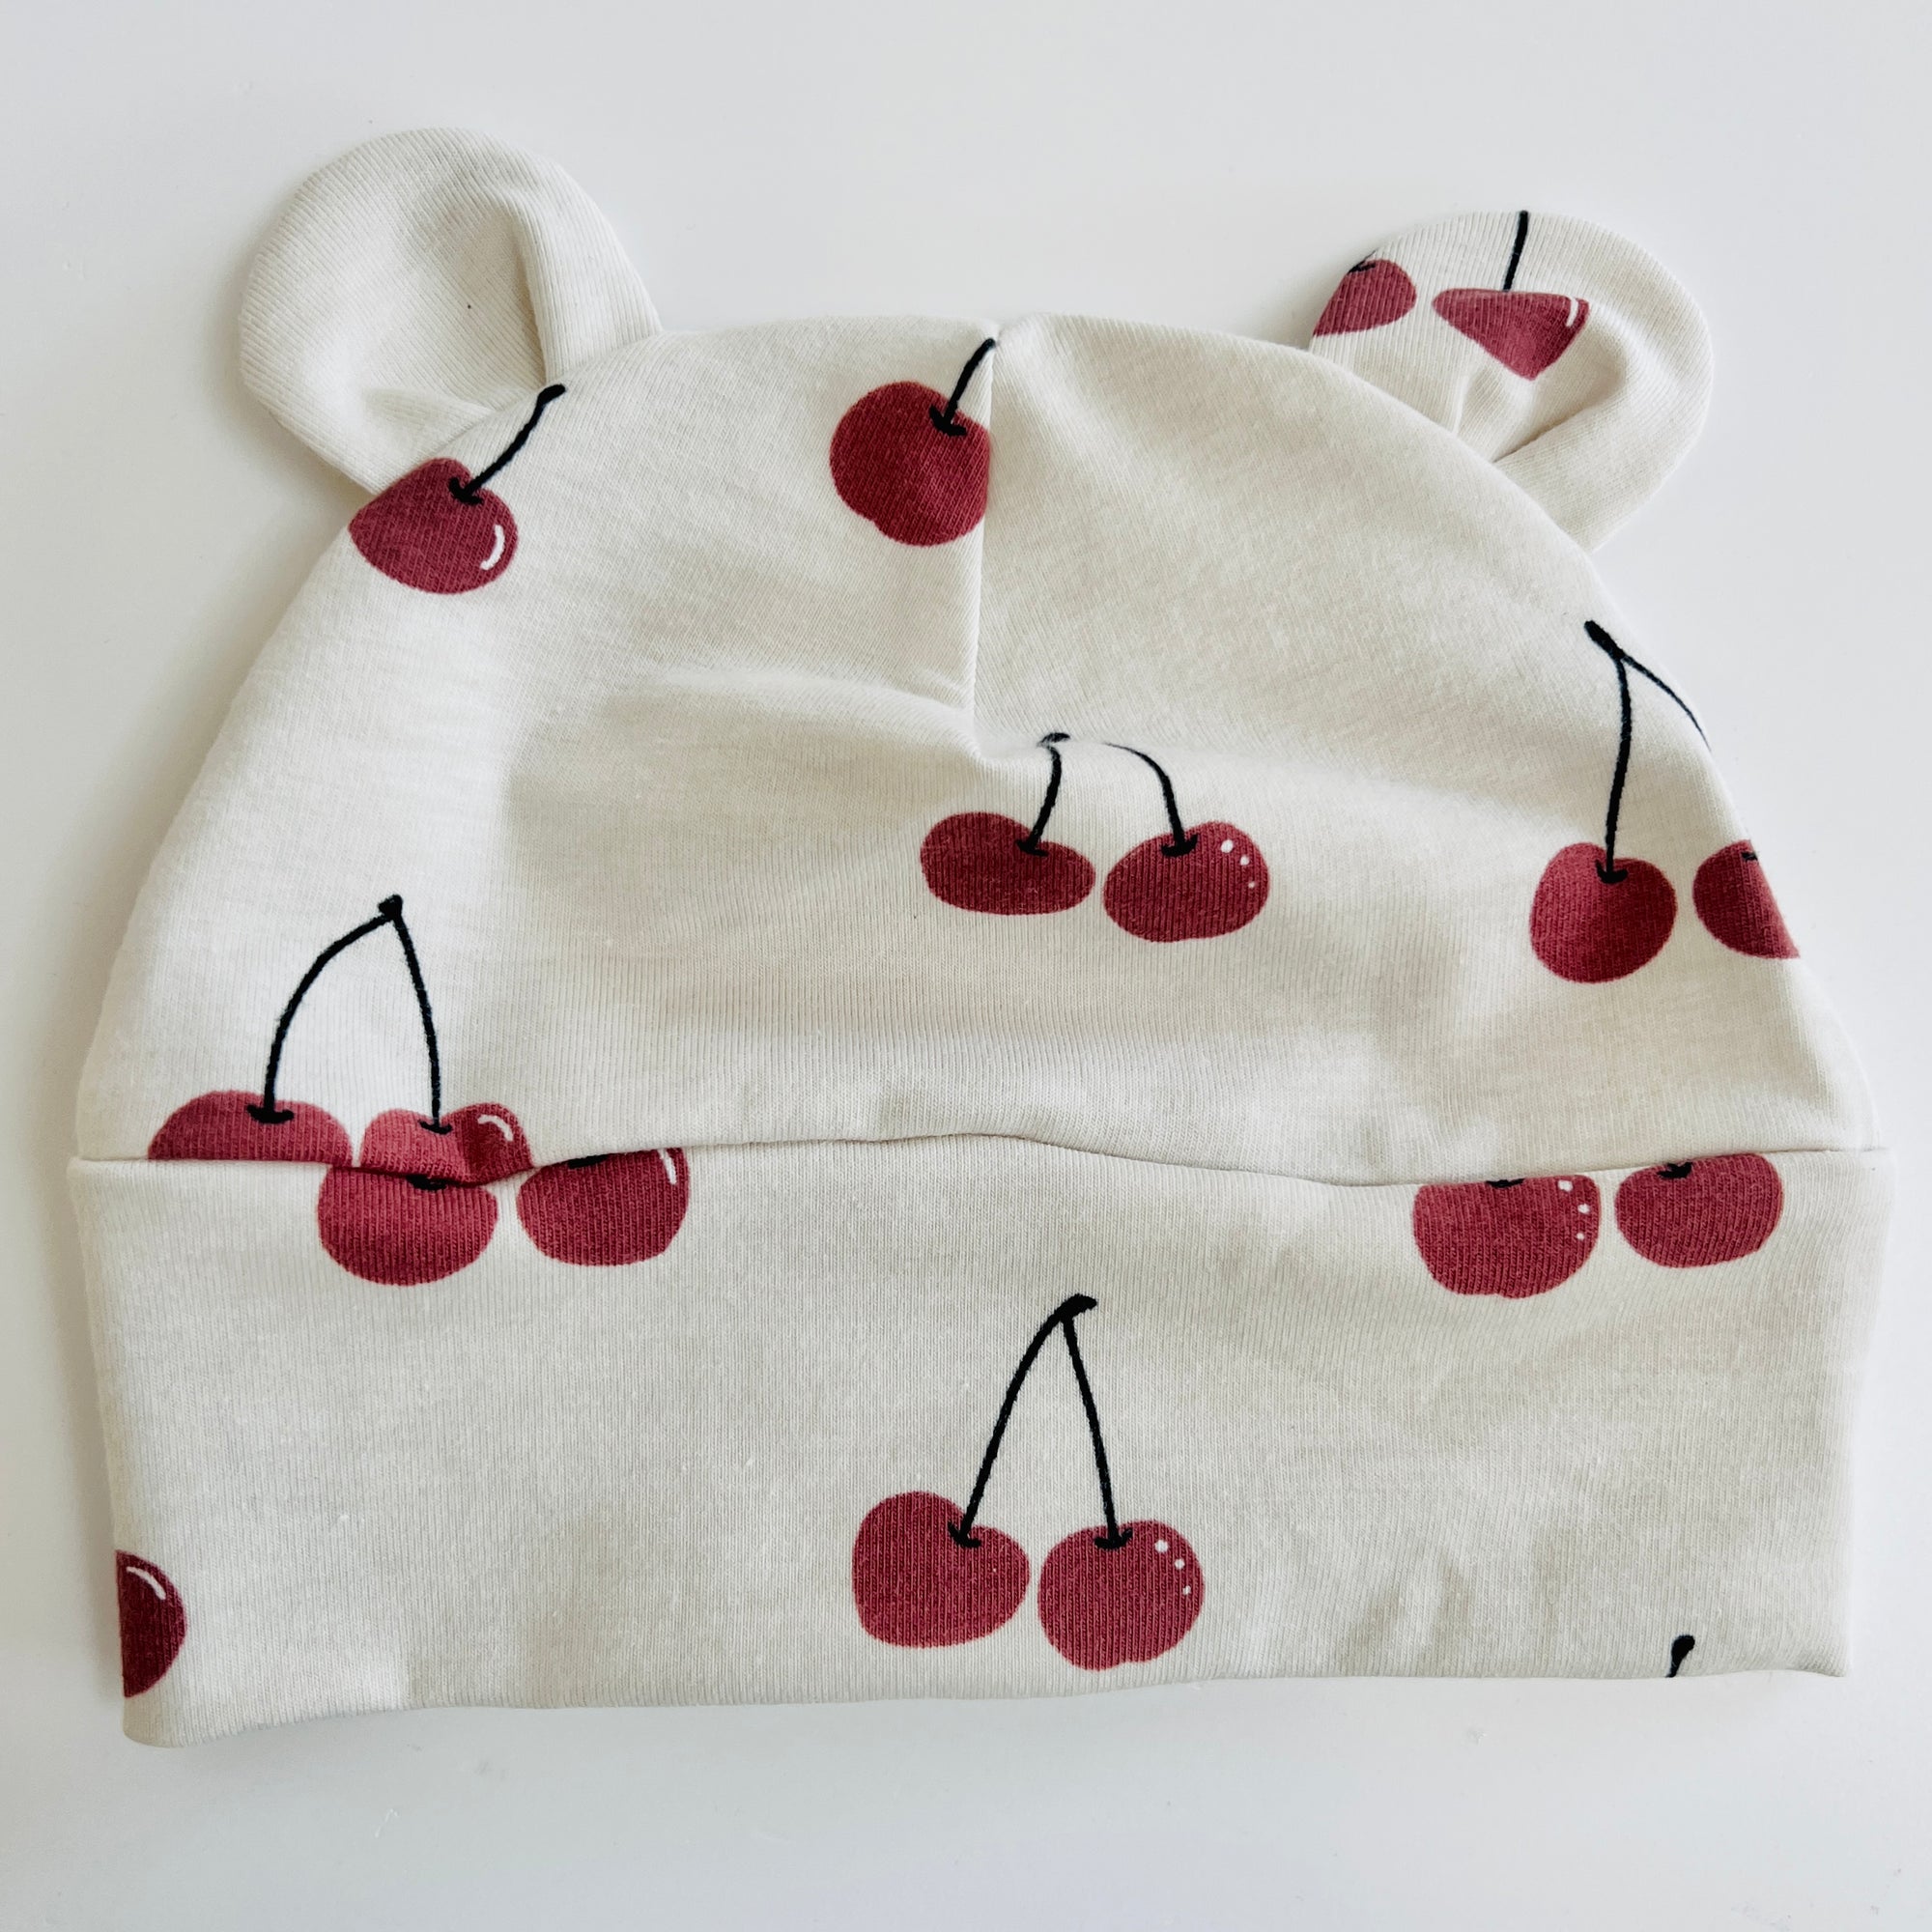 Eddie & Bee organic cotton Baby hat with ears  in Oat "Cherries" print.